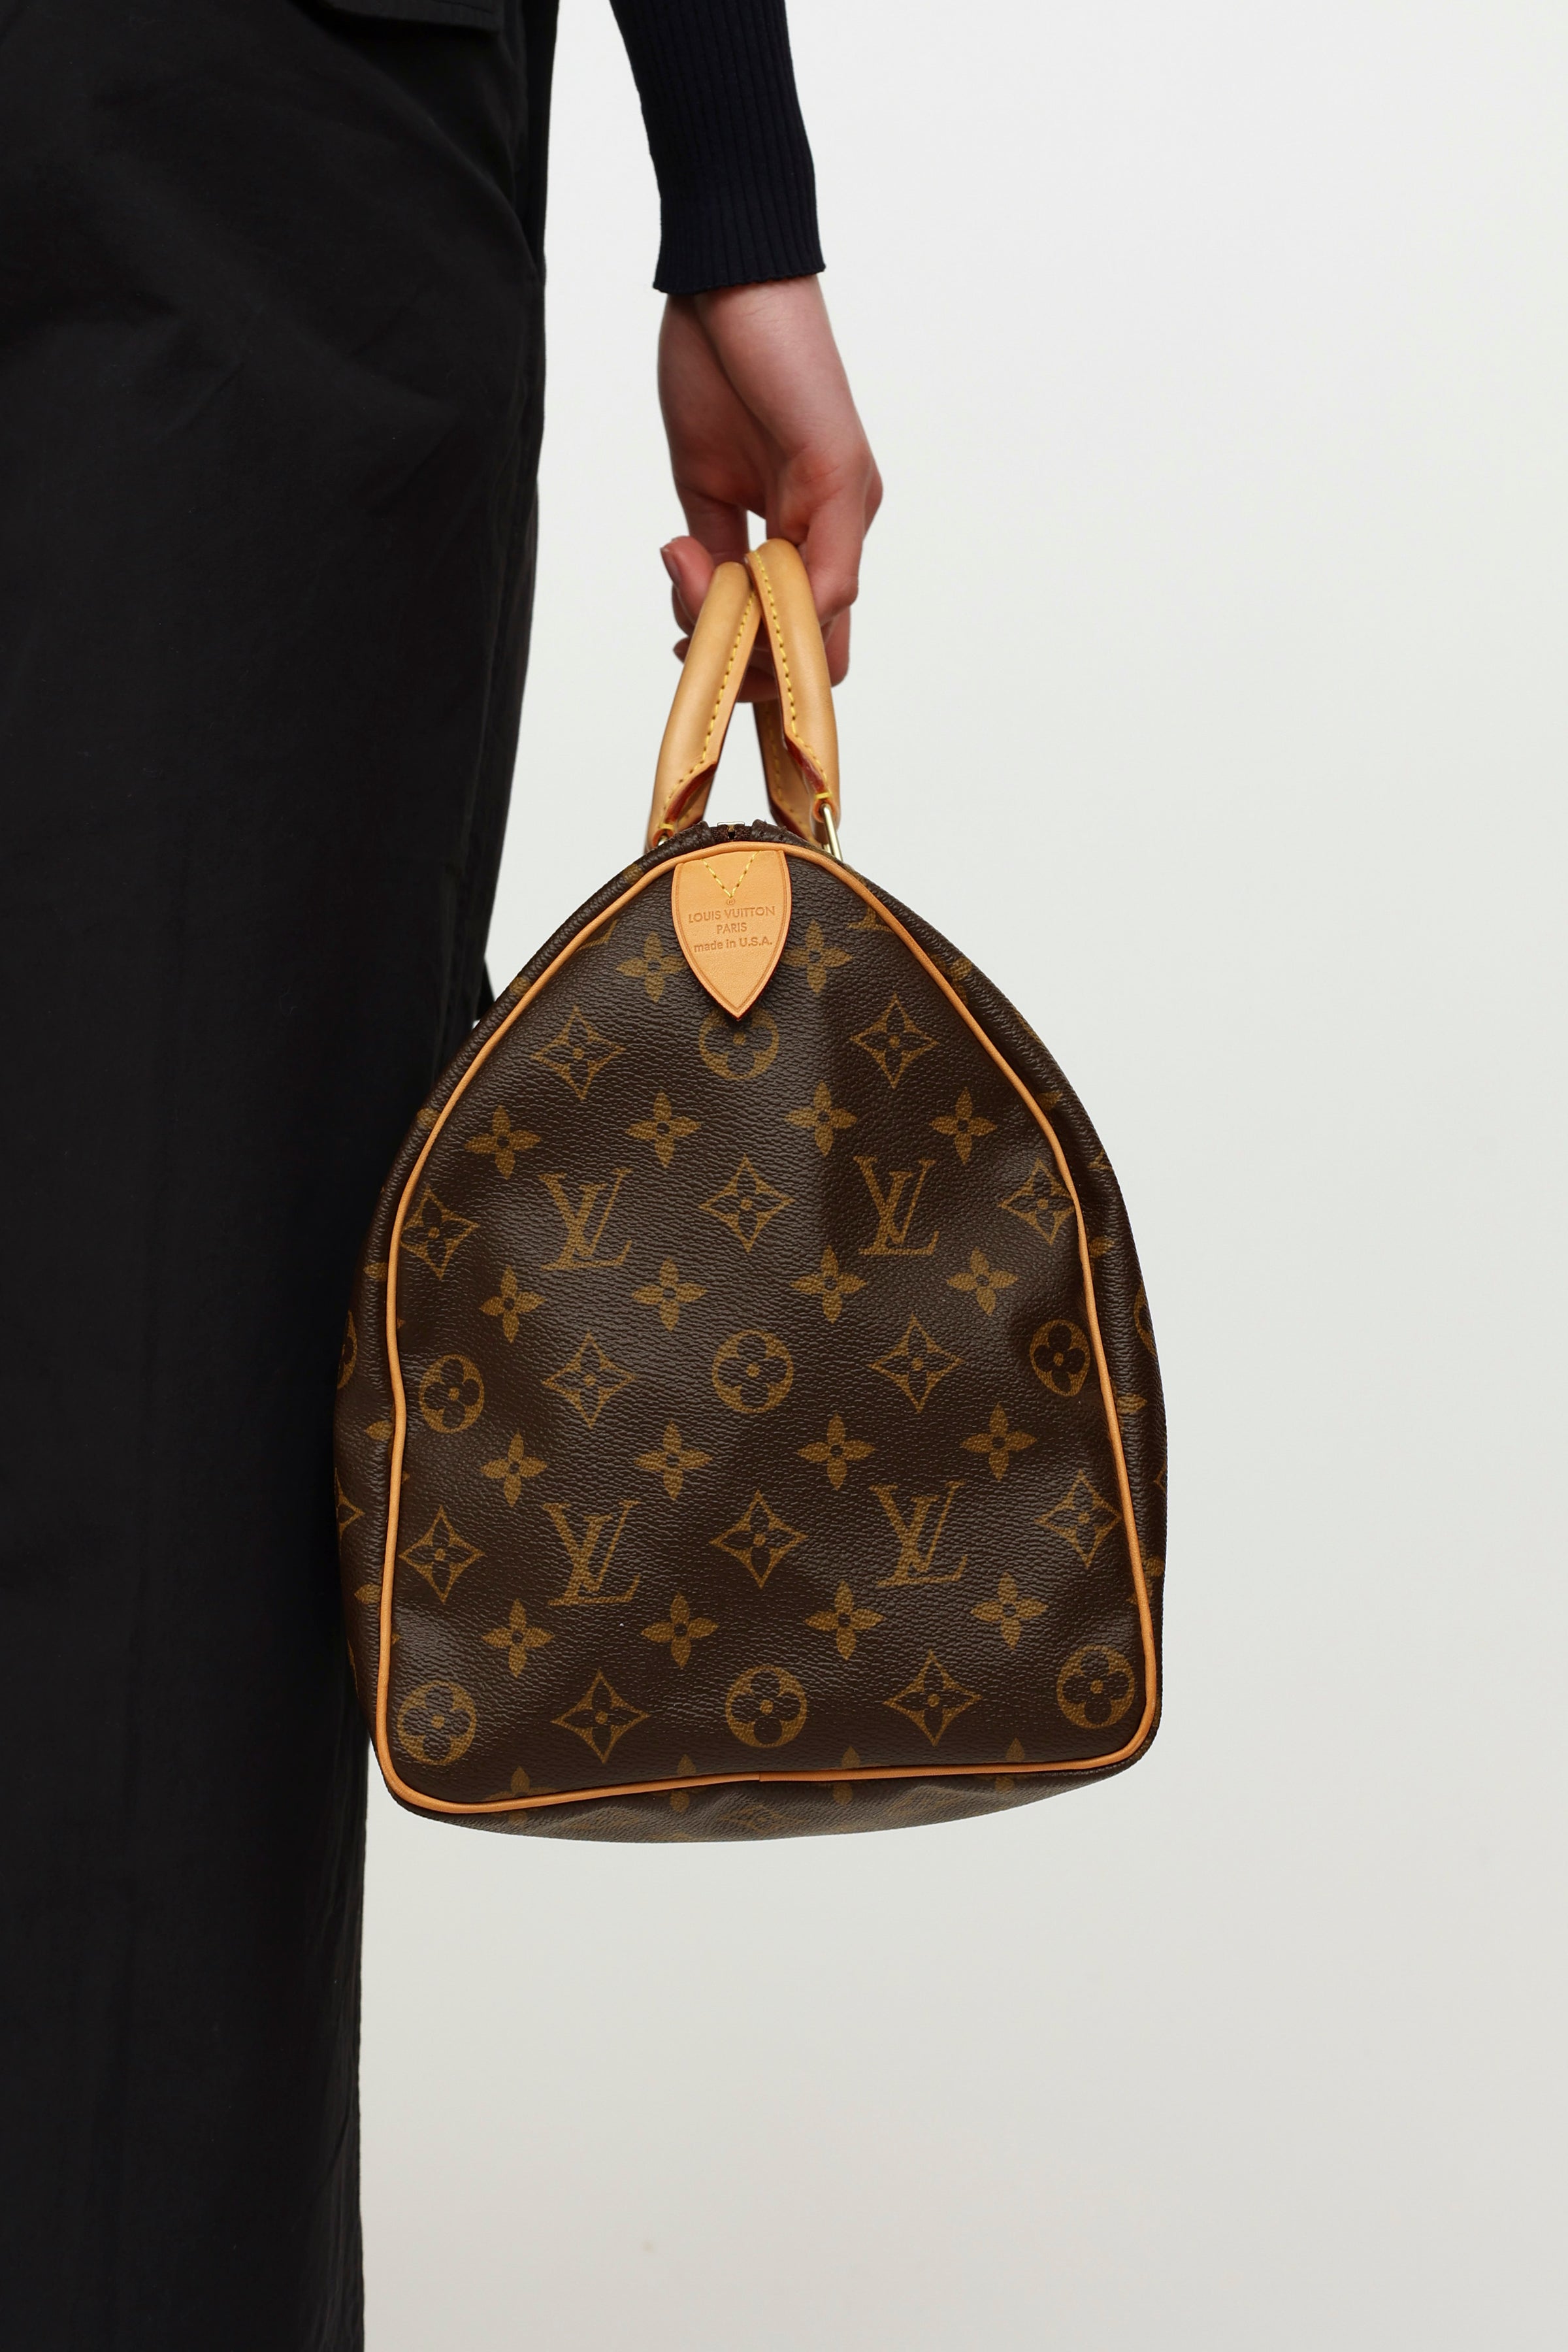 Louis Vuitton Monogram LV SPEEDY 35 Handbag Browns Canvas Bag - USA - GOOD